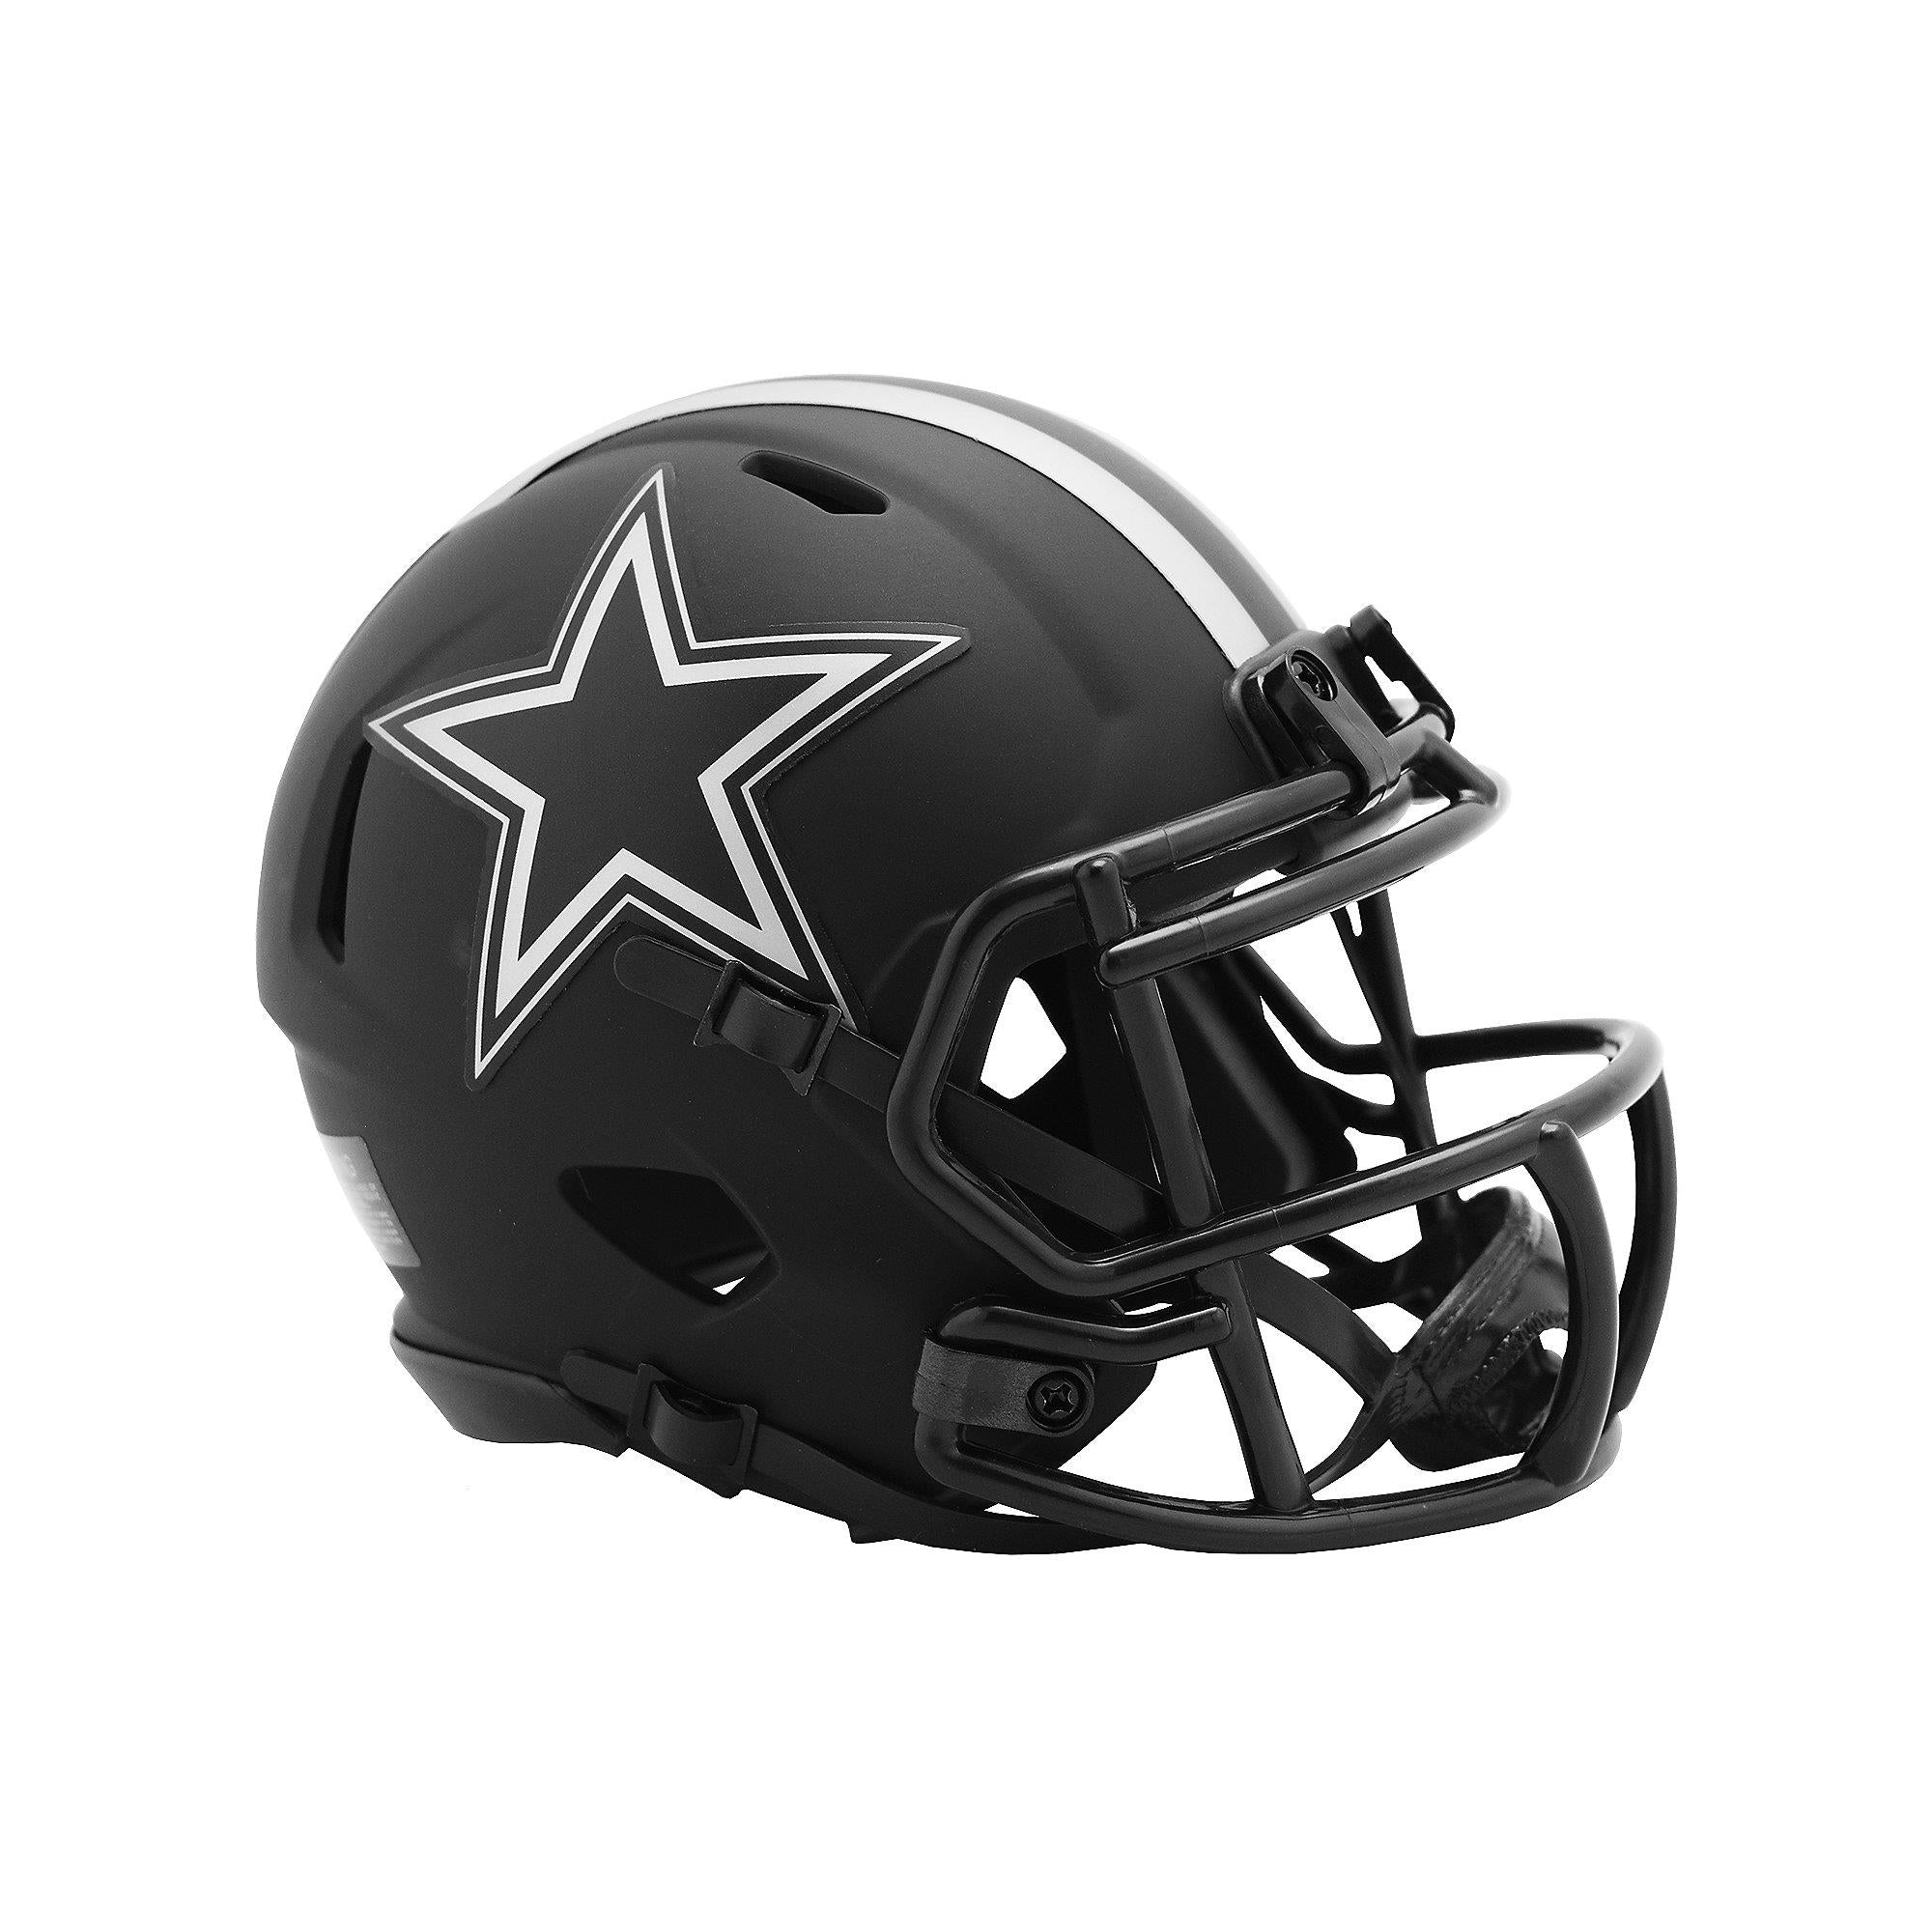 Sac Eclipse mini speed helmet/casque Cowboys.